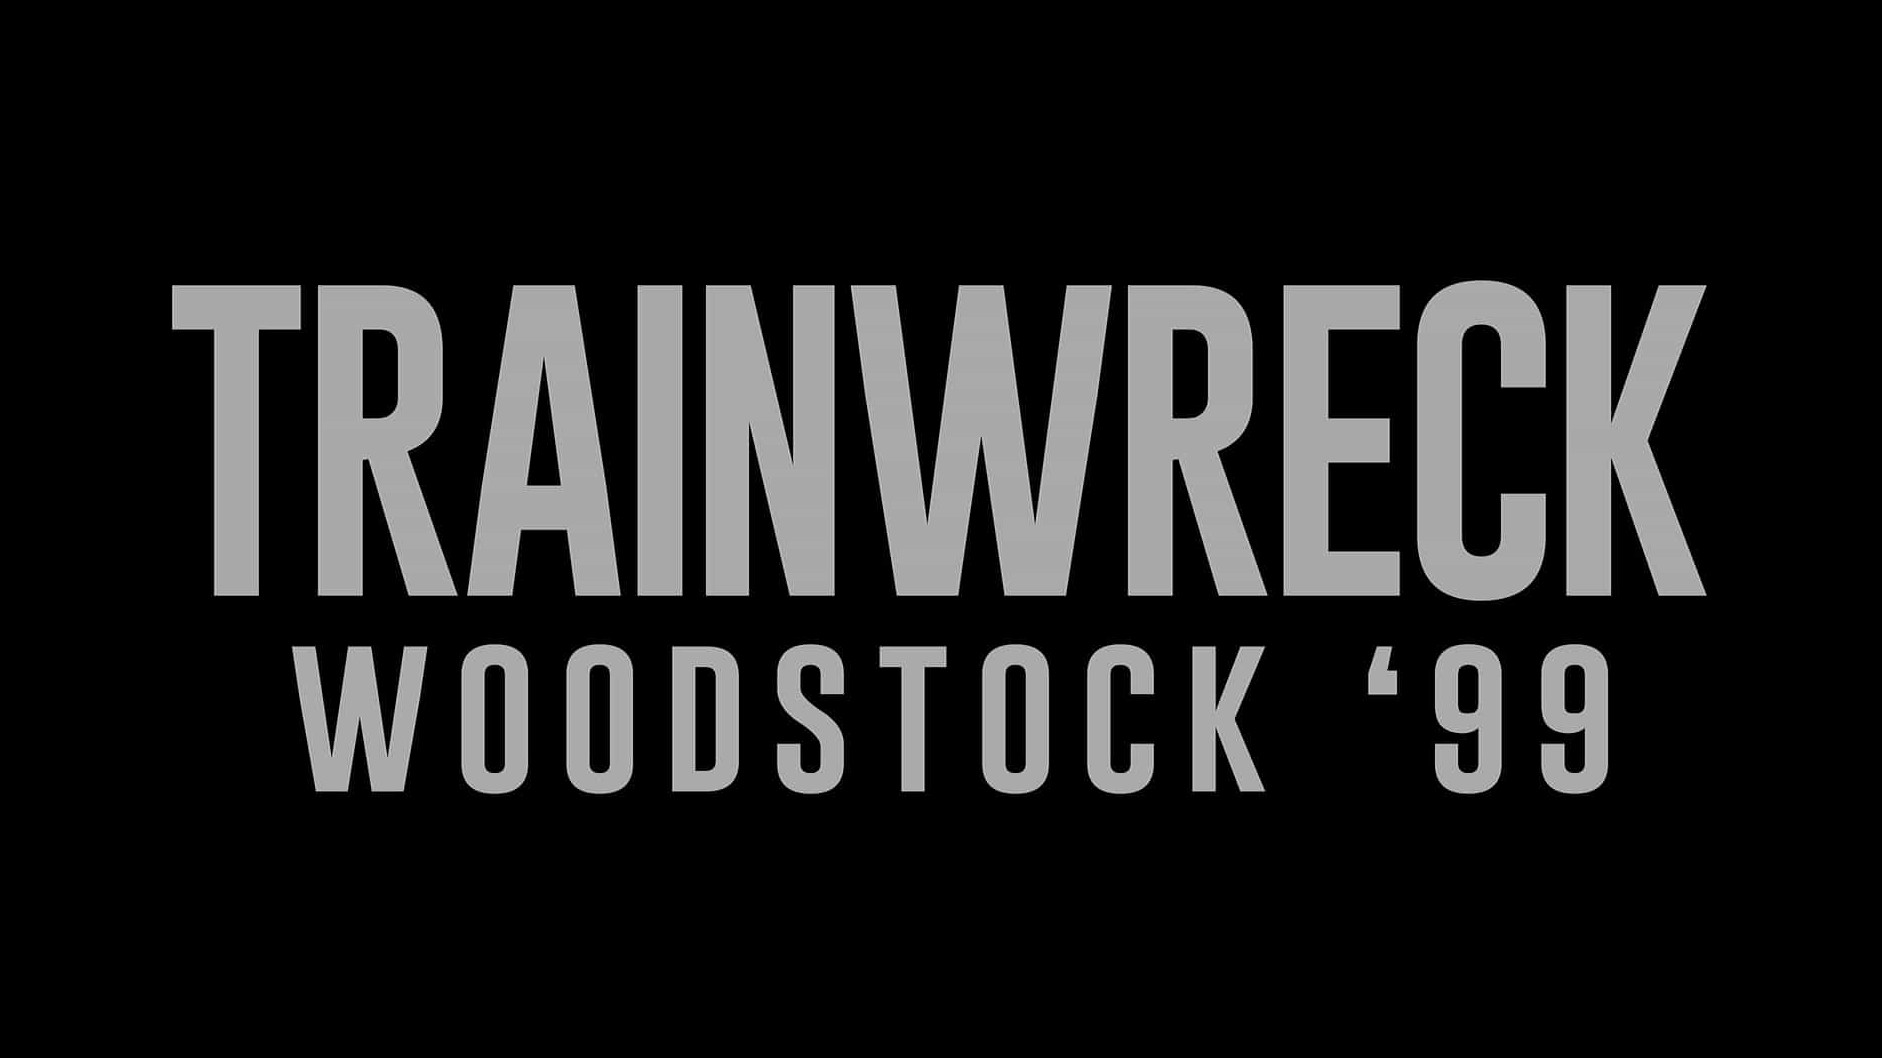 Netflix纪录片《全面失控：1999 伍德斯托克音乐节 Trainwreck: Woodstock 